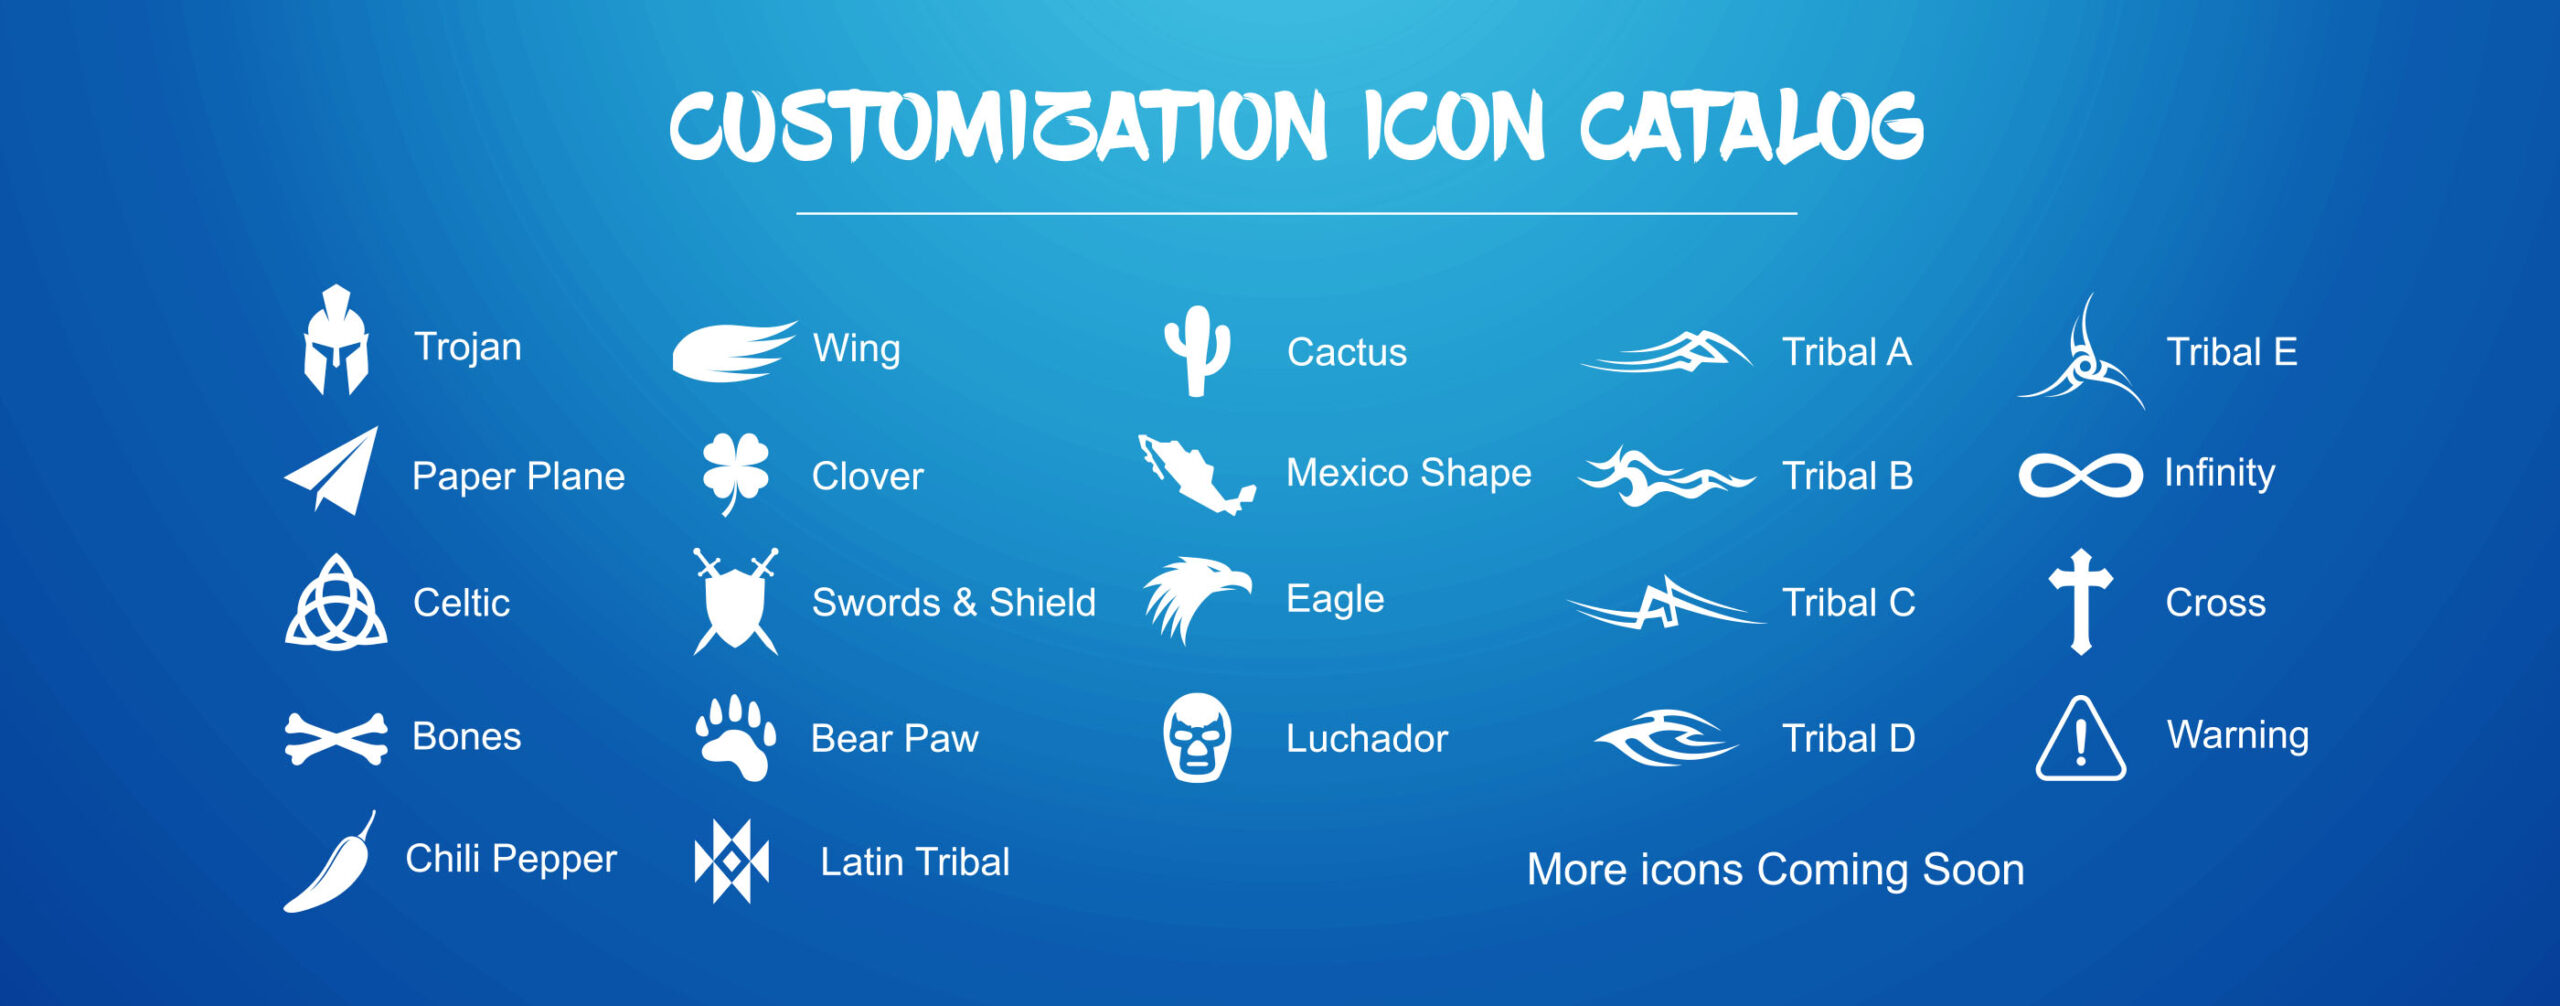 Customization icon catalog 2